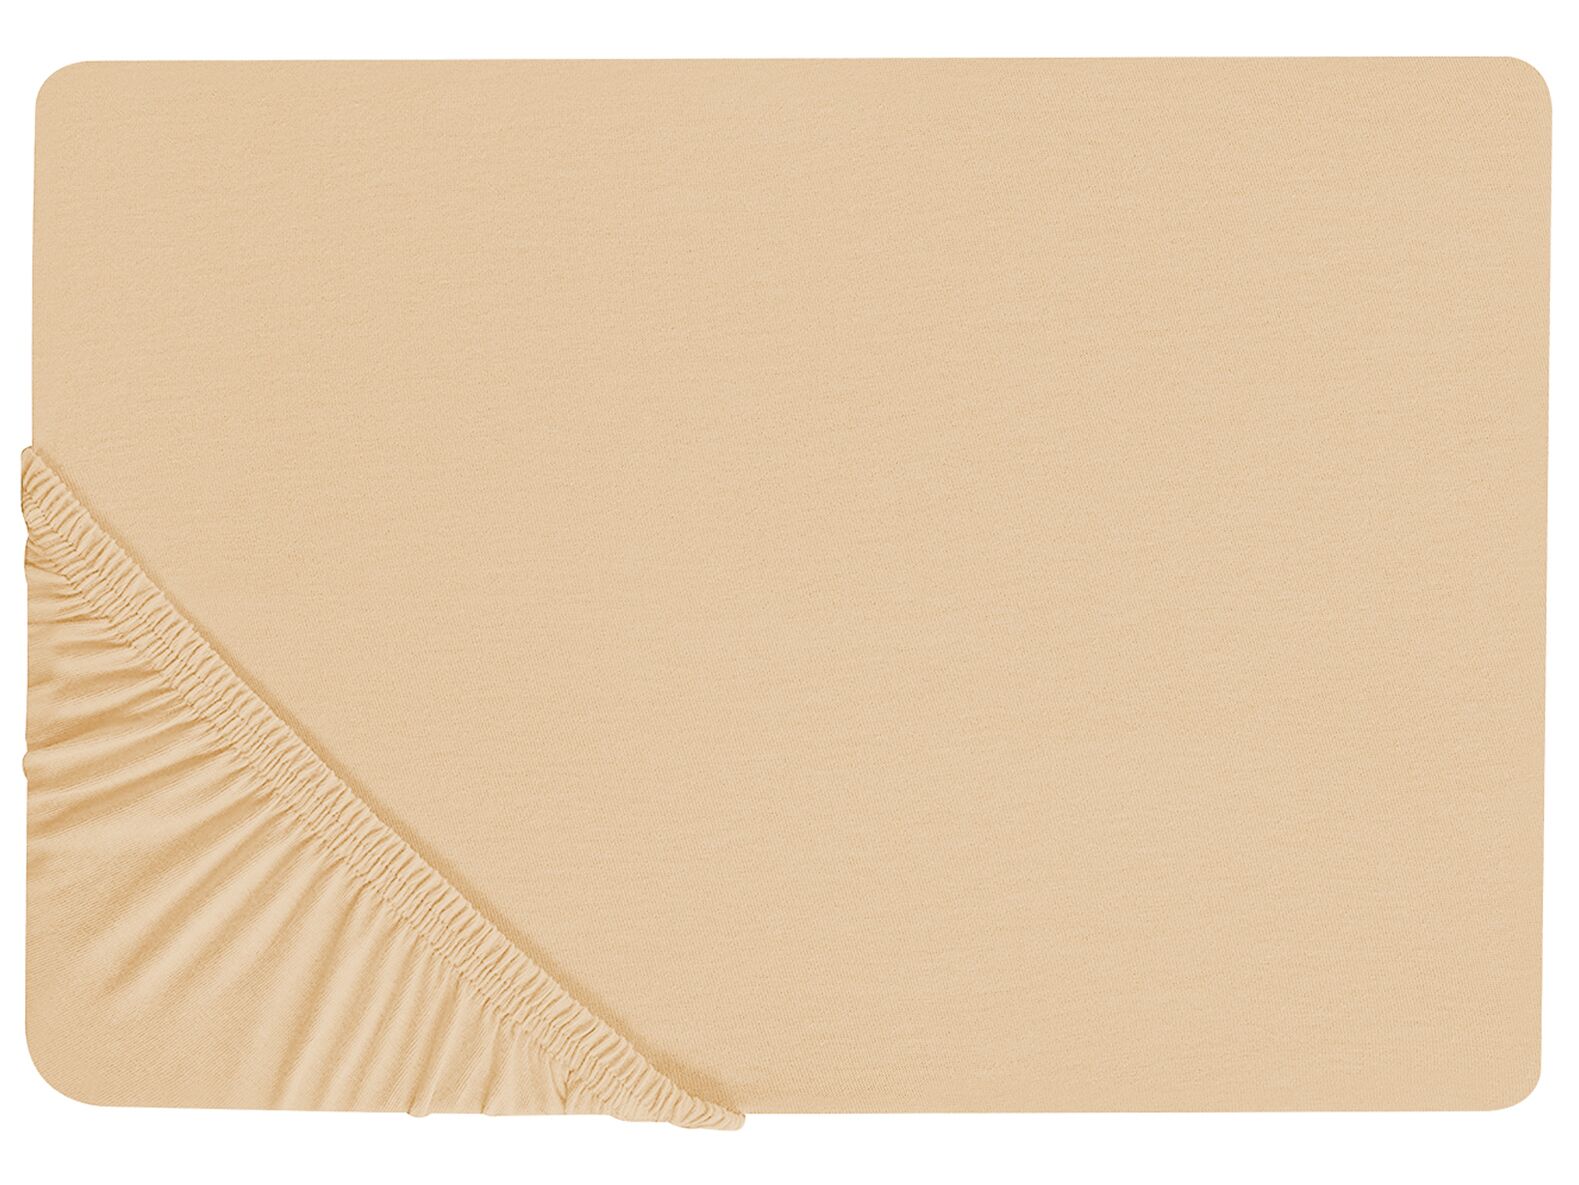 Cotton Fitted Sheet 180 x 200 cm Sand Beige JANBU_845952